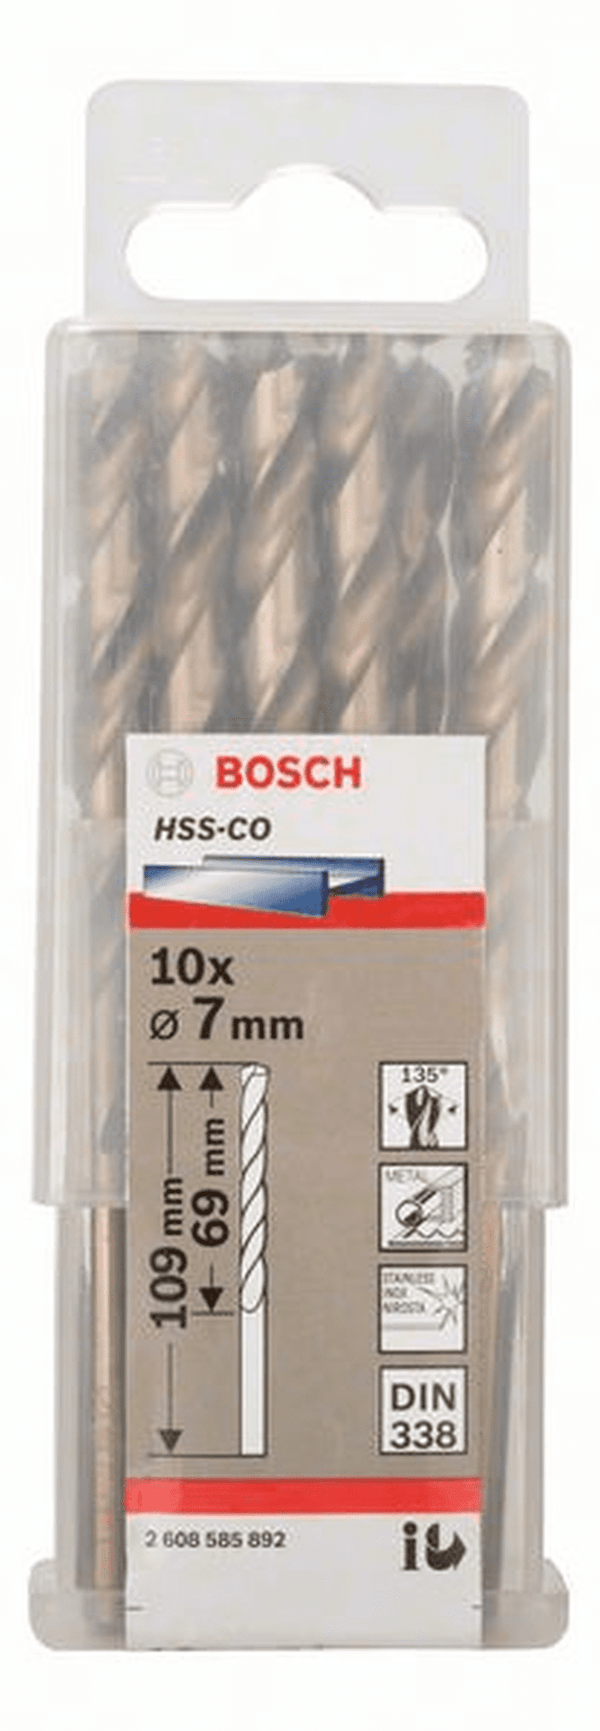 Bosch  HSS TWIST DRILL BIT COBALT FOR ROTARY DRILLS/DRIVERS  7 MM - 2608585892